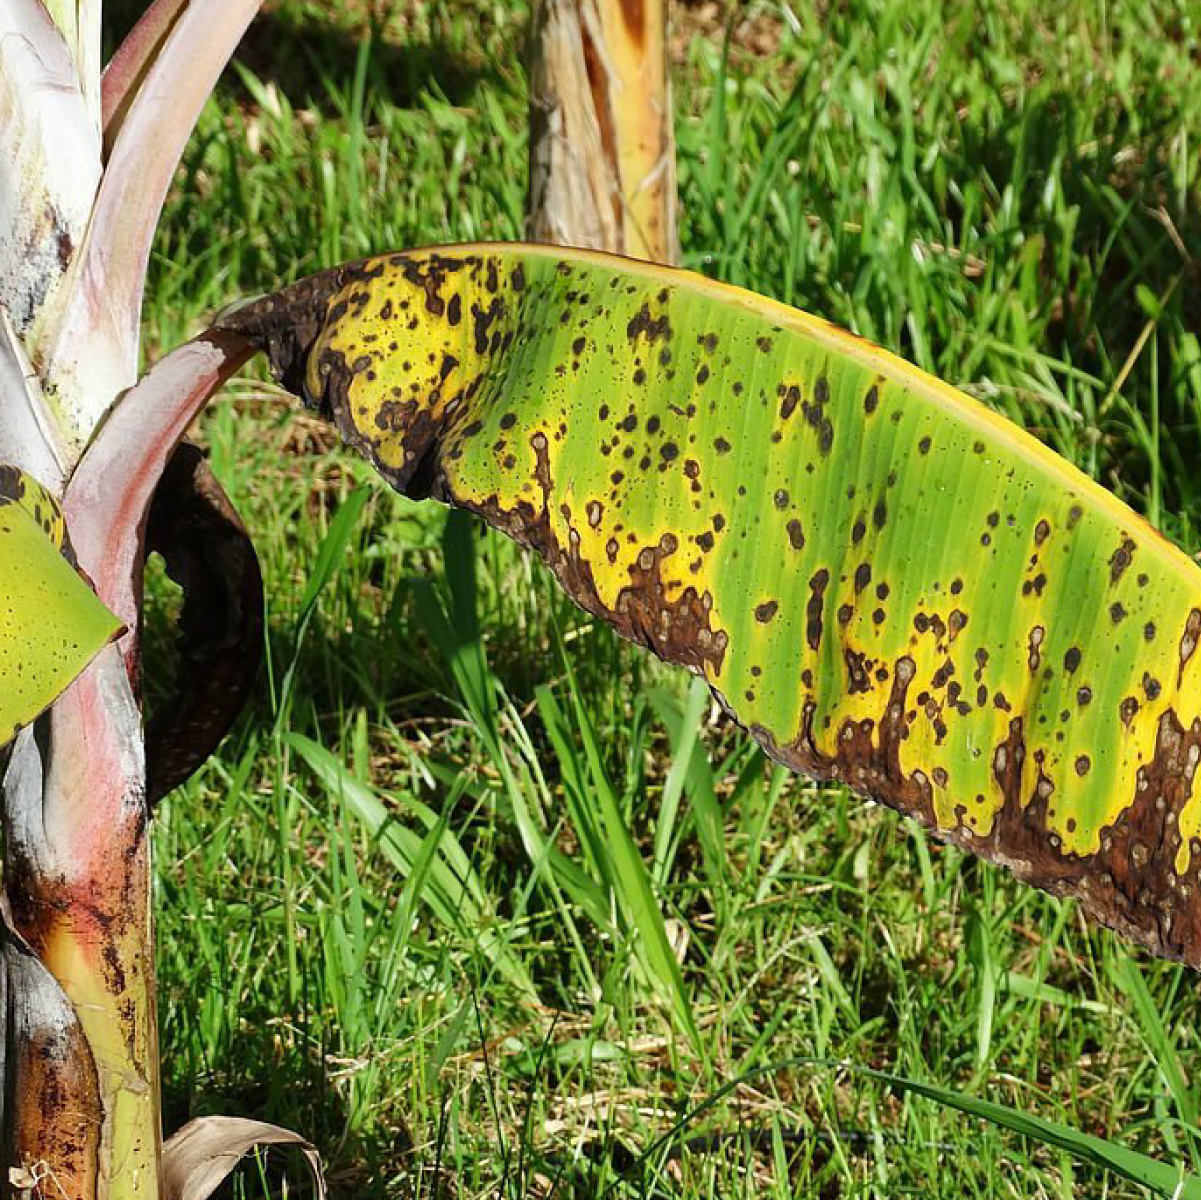 Banana Leaf Disease Detection using CNN